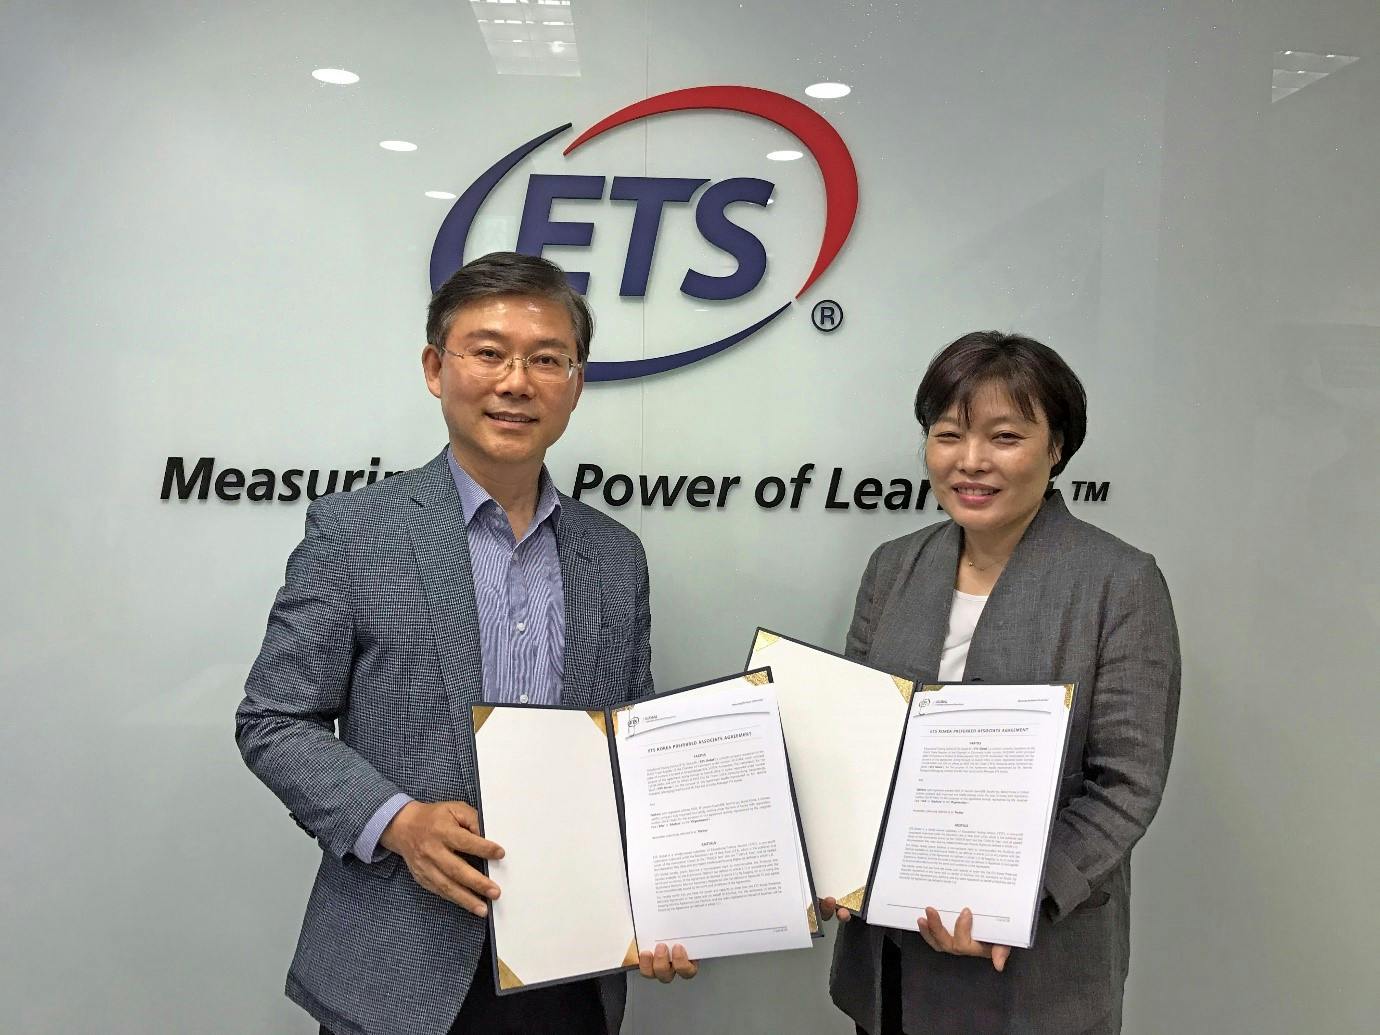 Paul Lee, Directeur Regional d'ETS Global en Corée et Mme Jangmee Park, PDG d'EduFore